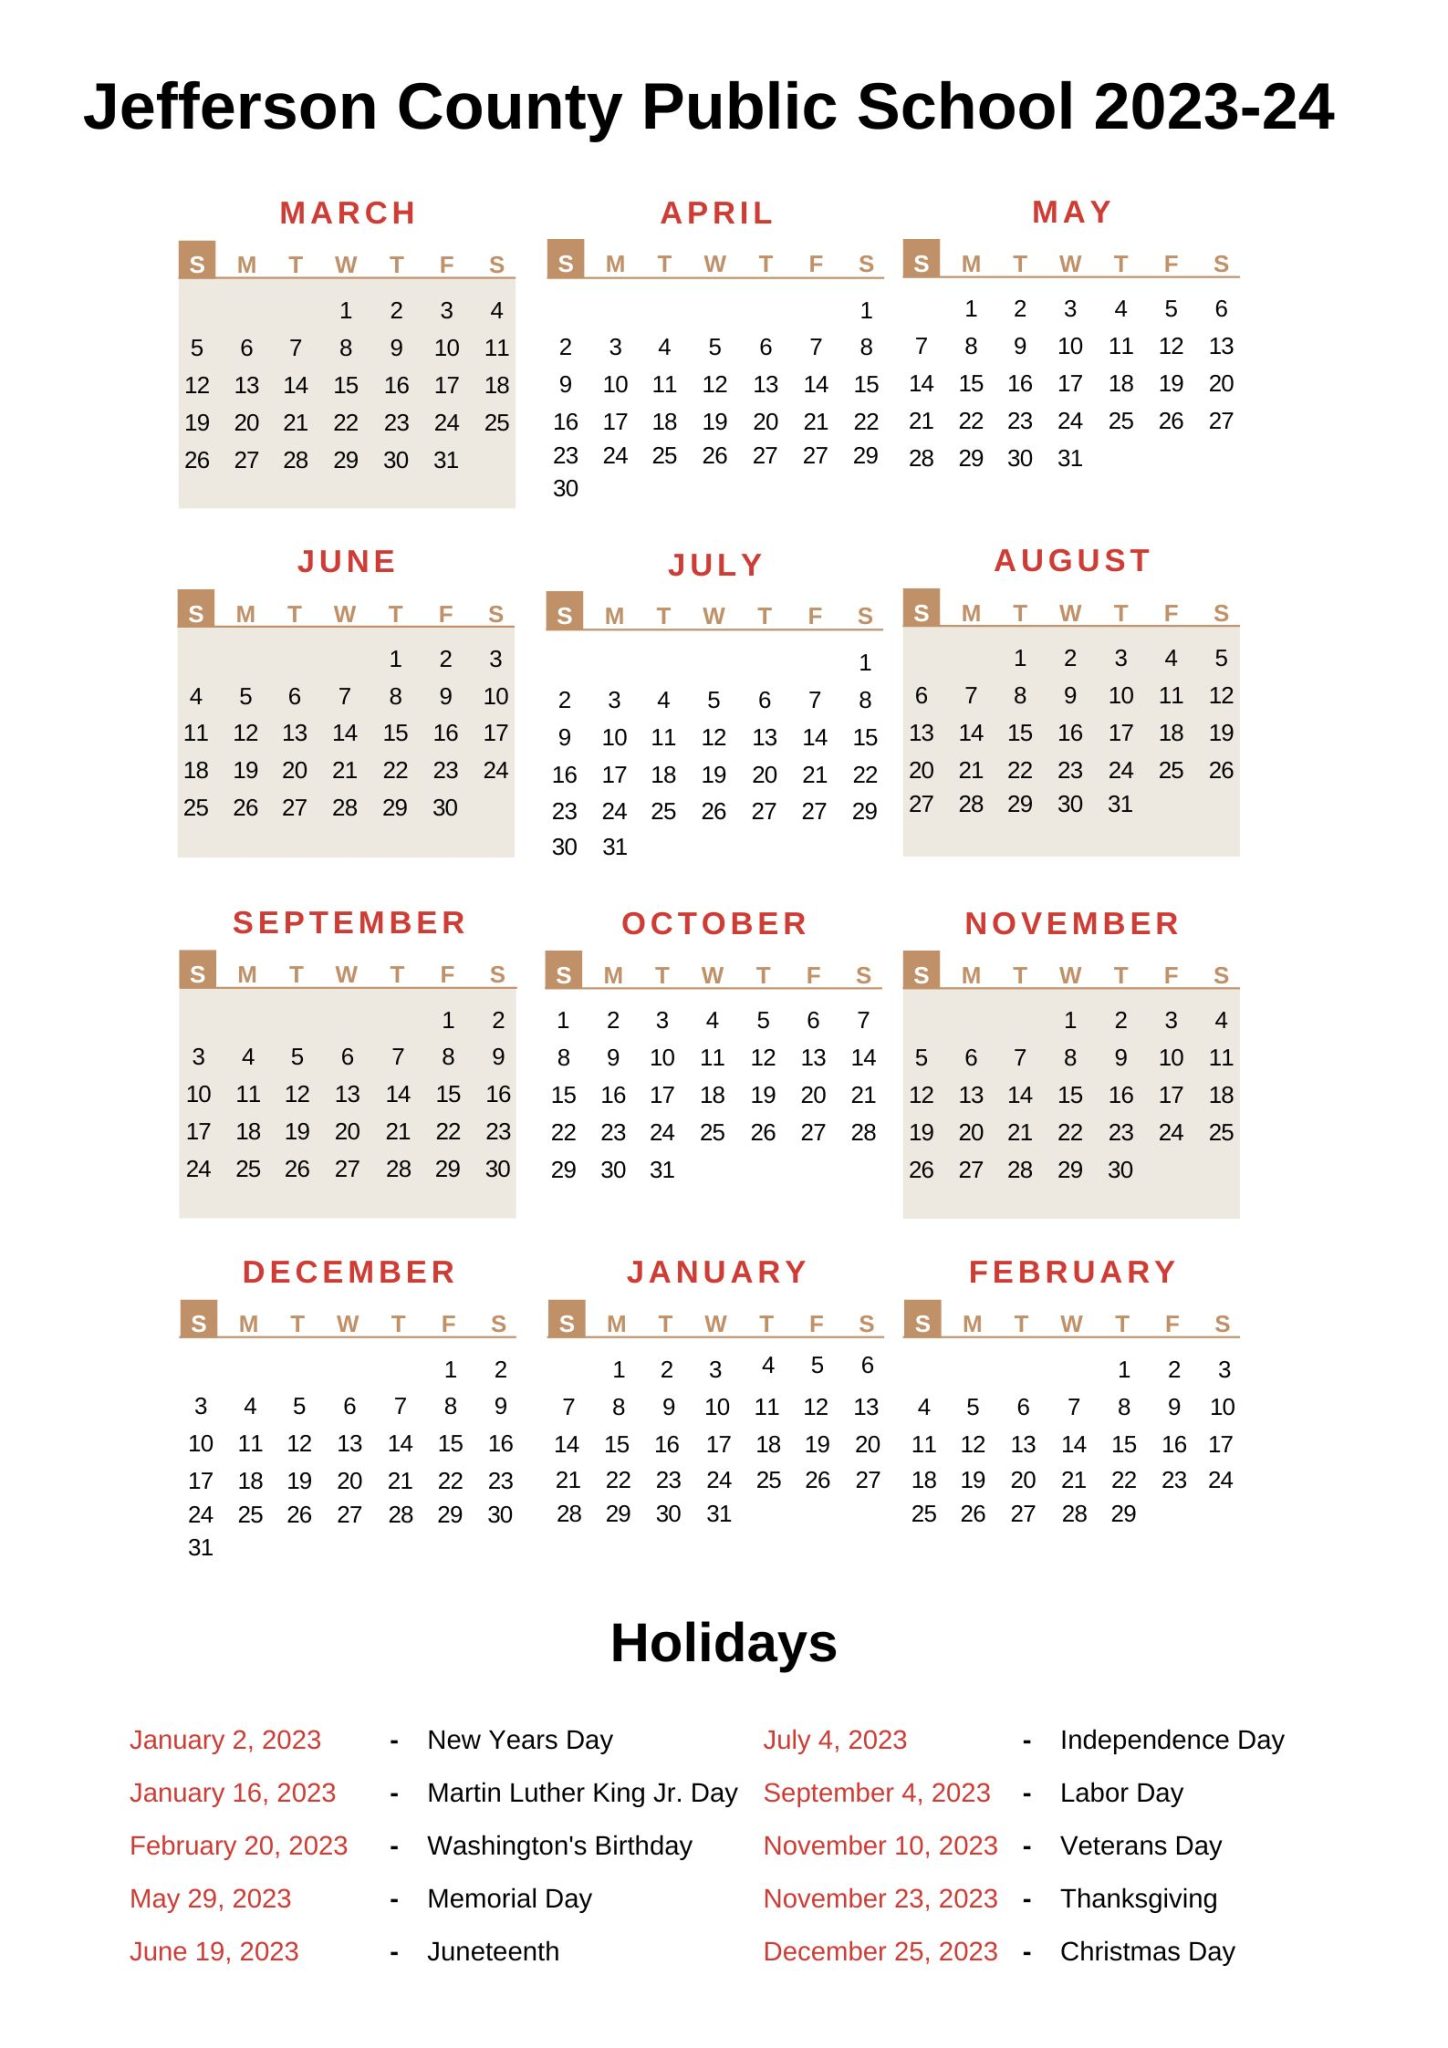 Jefferson County Public Schools Calendar 202324 with Holidays